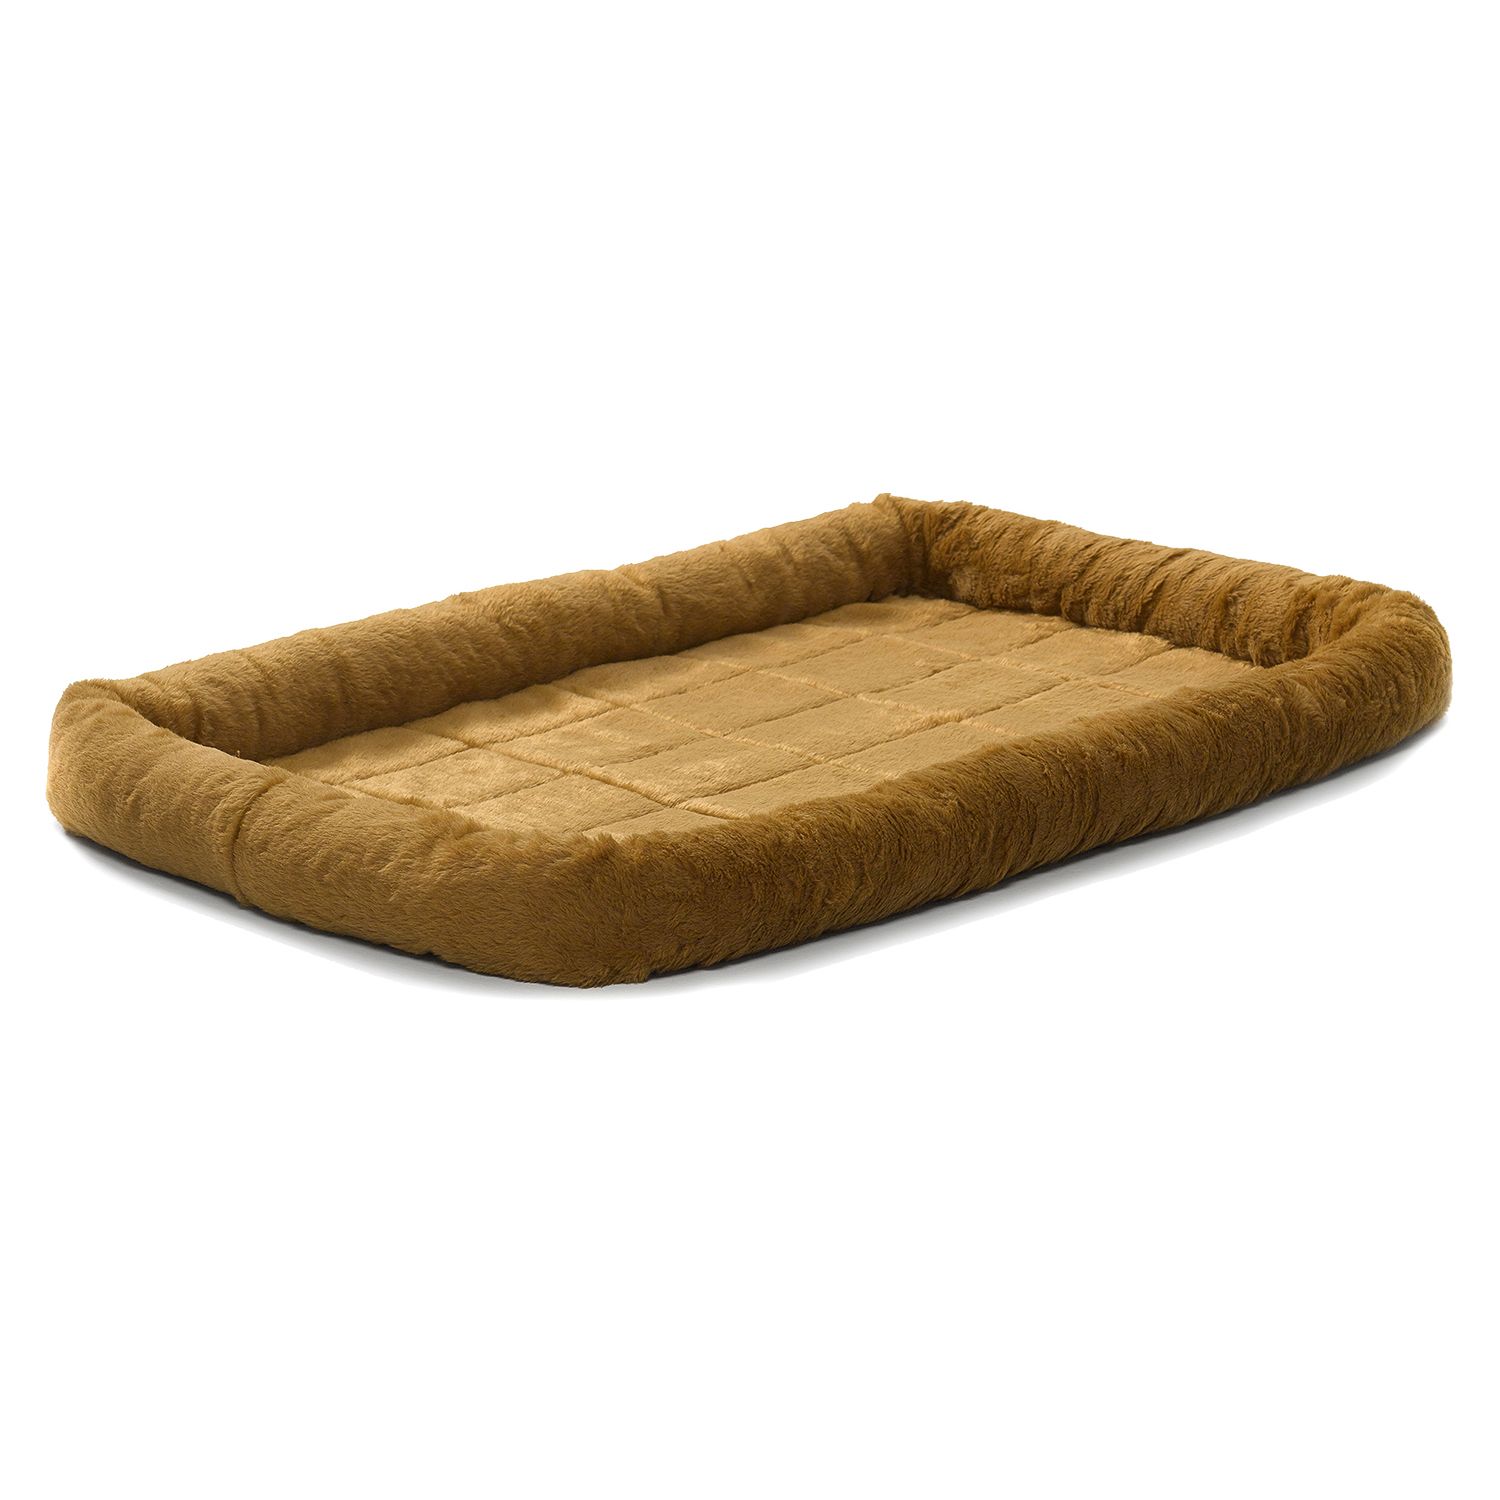 MidWest лежанка Pet Bed меховая 92х60 см коричневая - фото 1